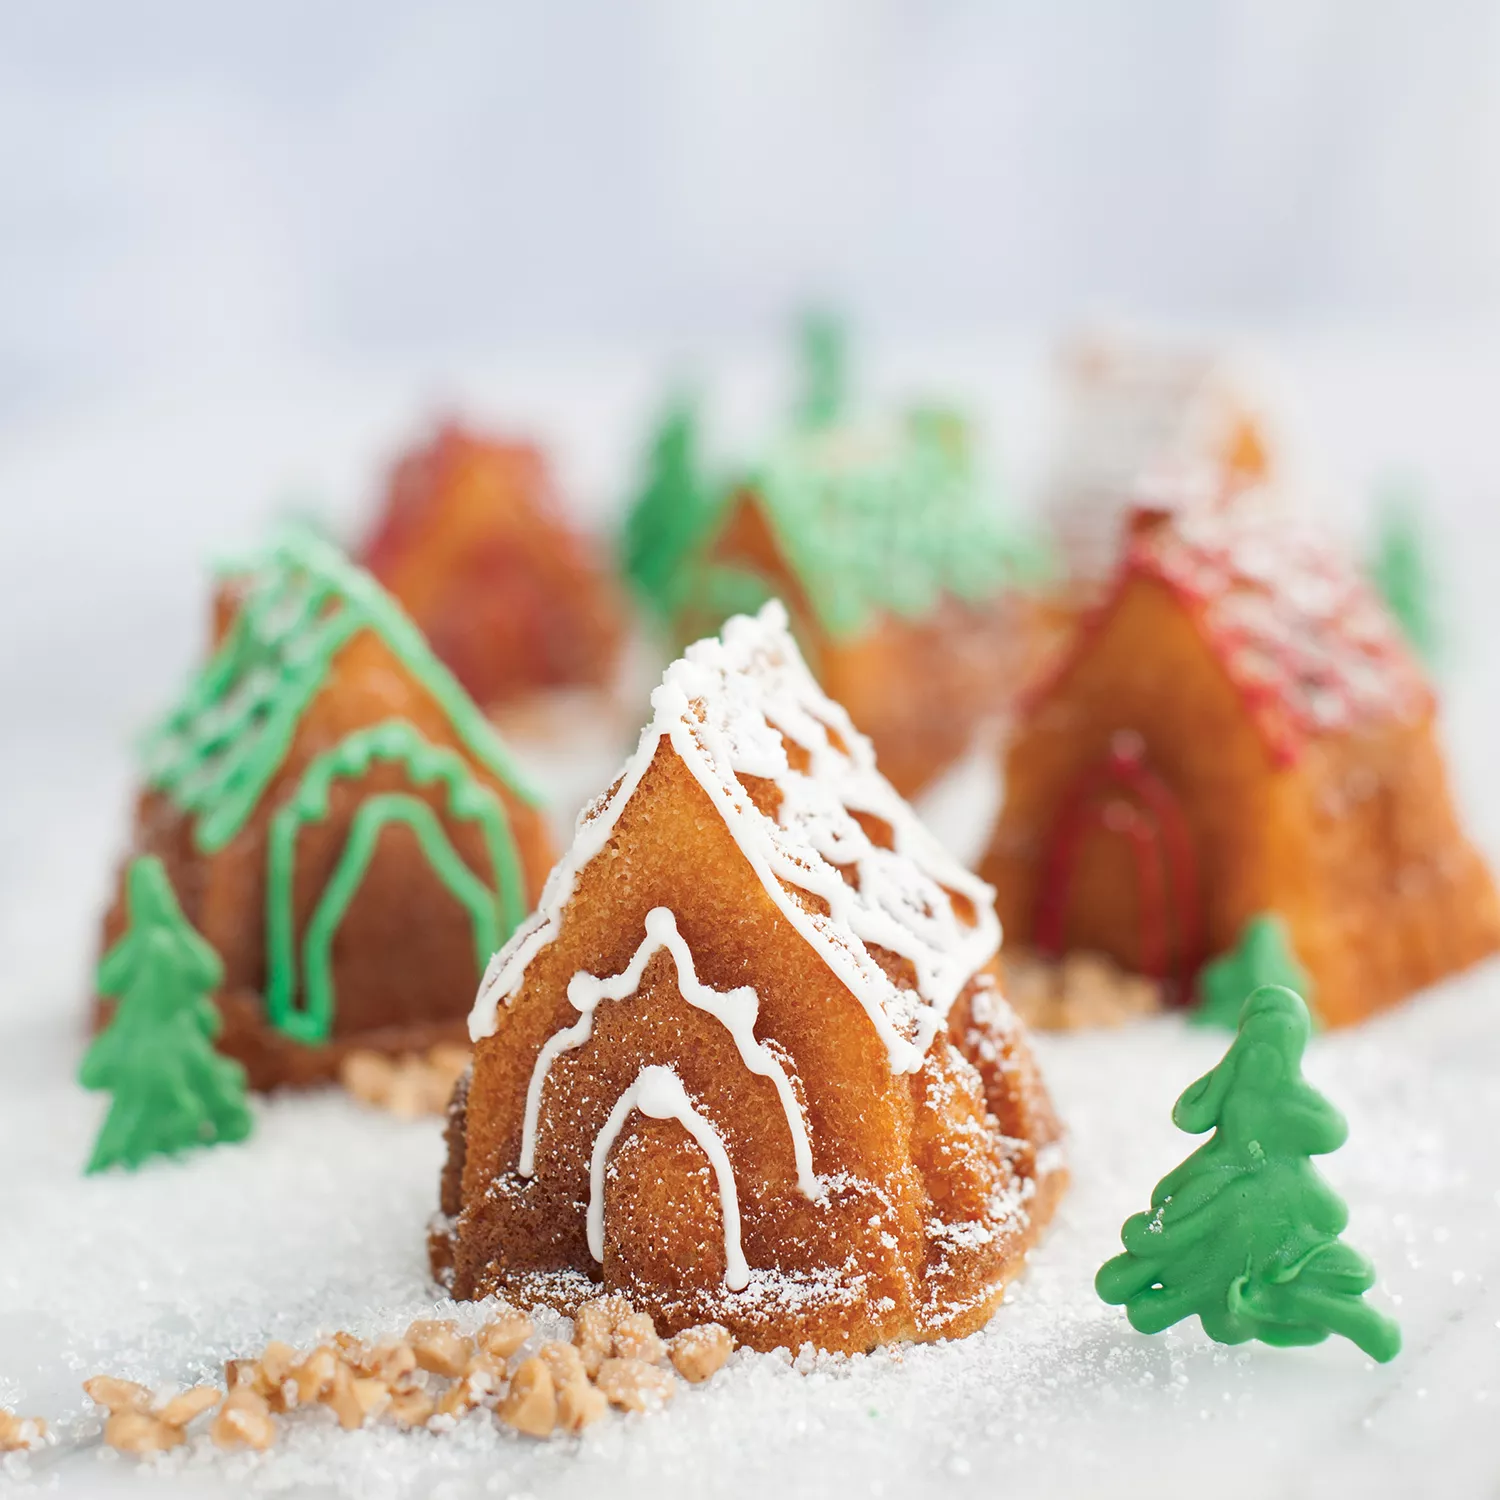 Nordic Ware Christmas Mini Muffin Pan Bakeware Four patterns Cake Pan  Holiday